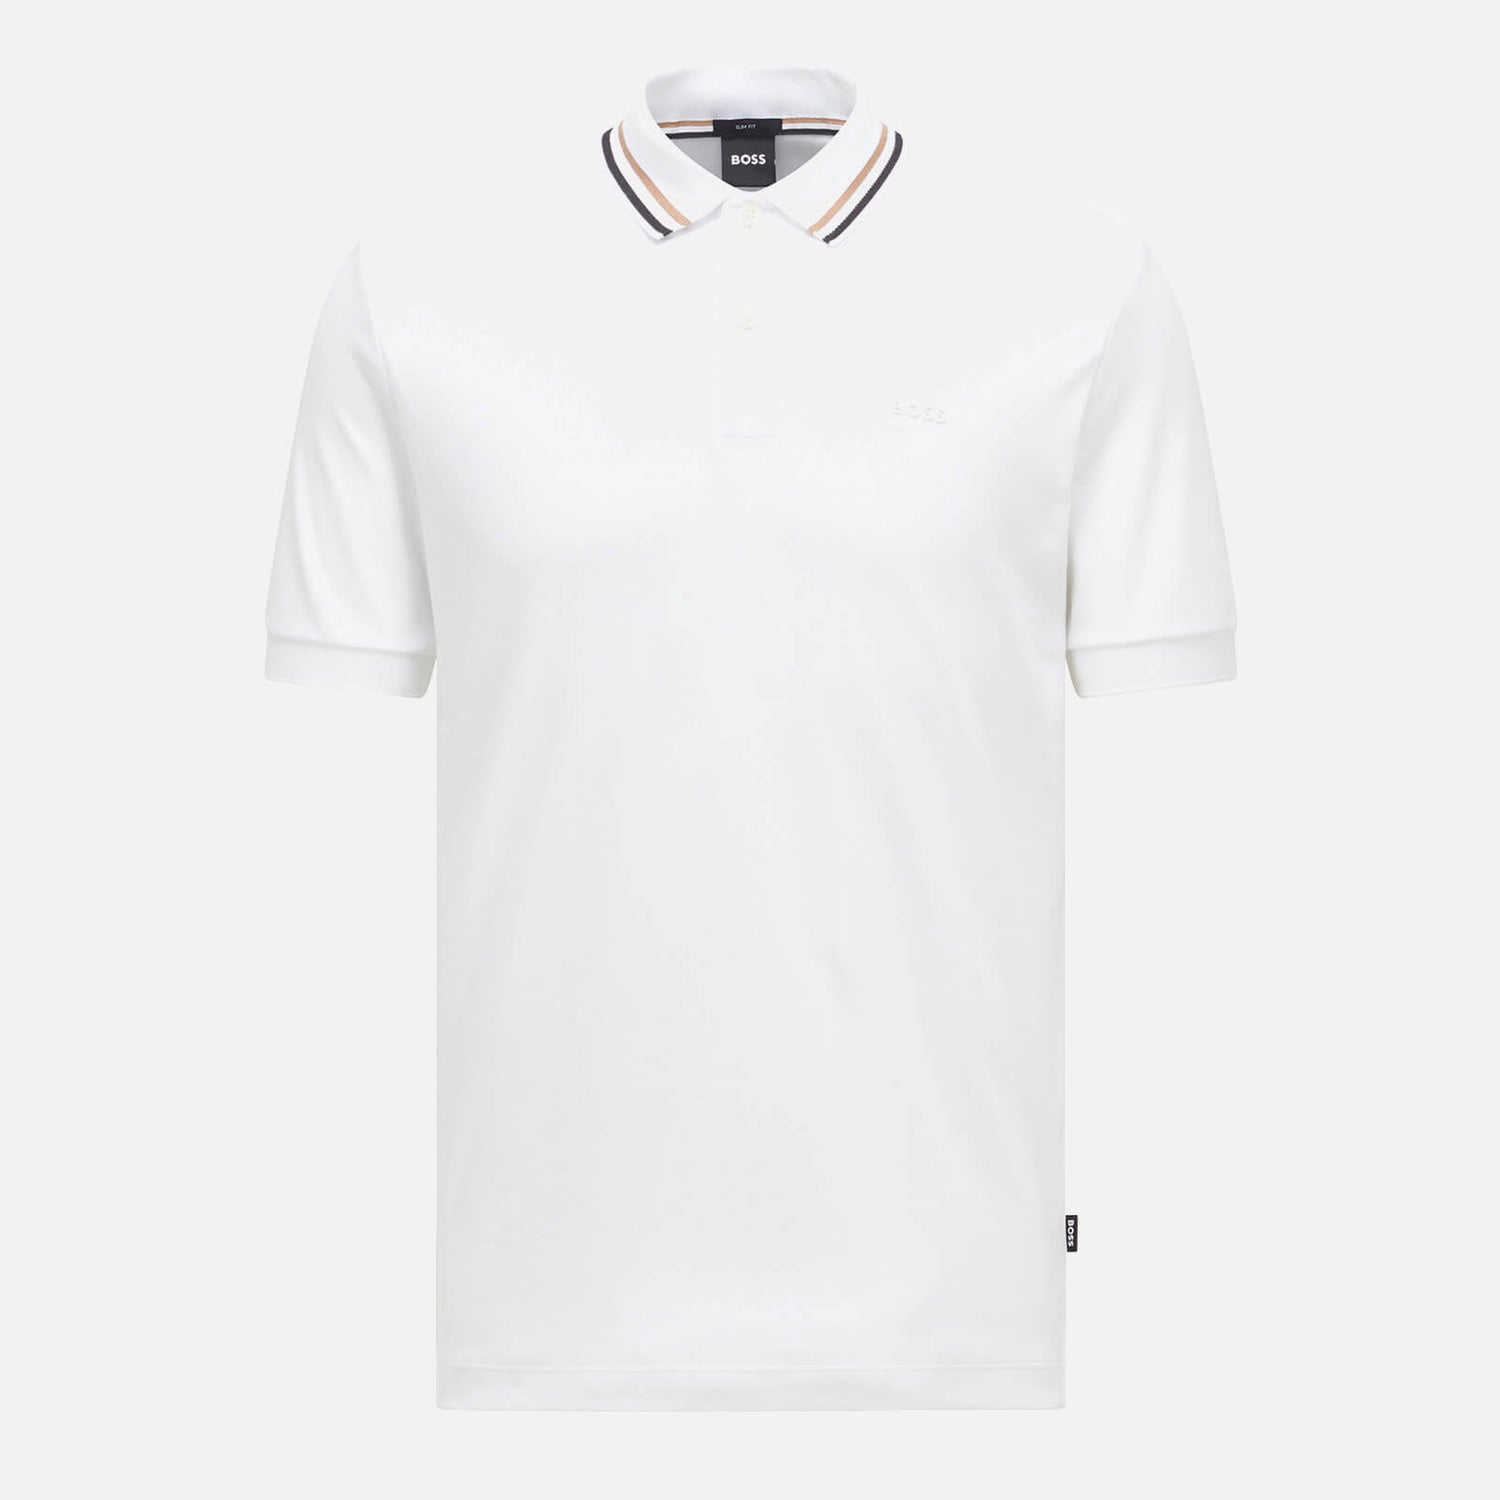 BOSS Black Men's Penrose 38 Polo Shirt - White - L